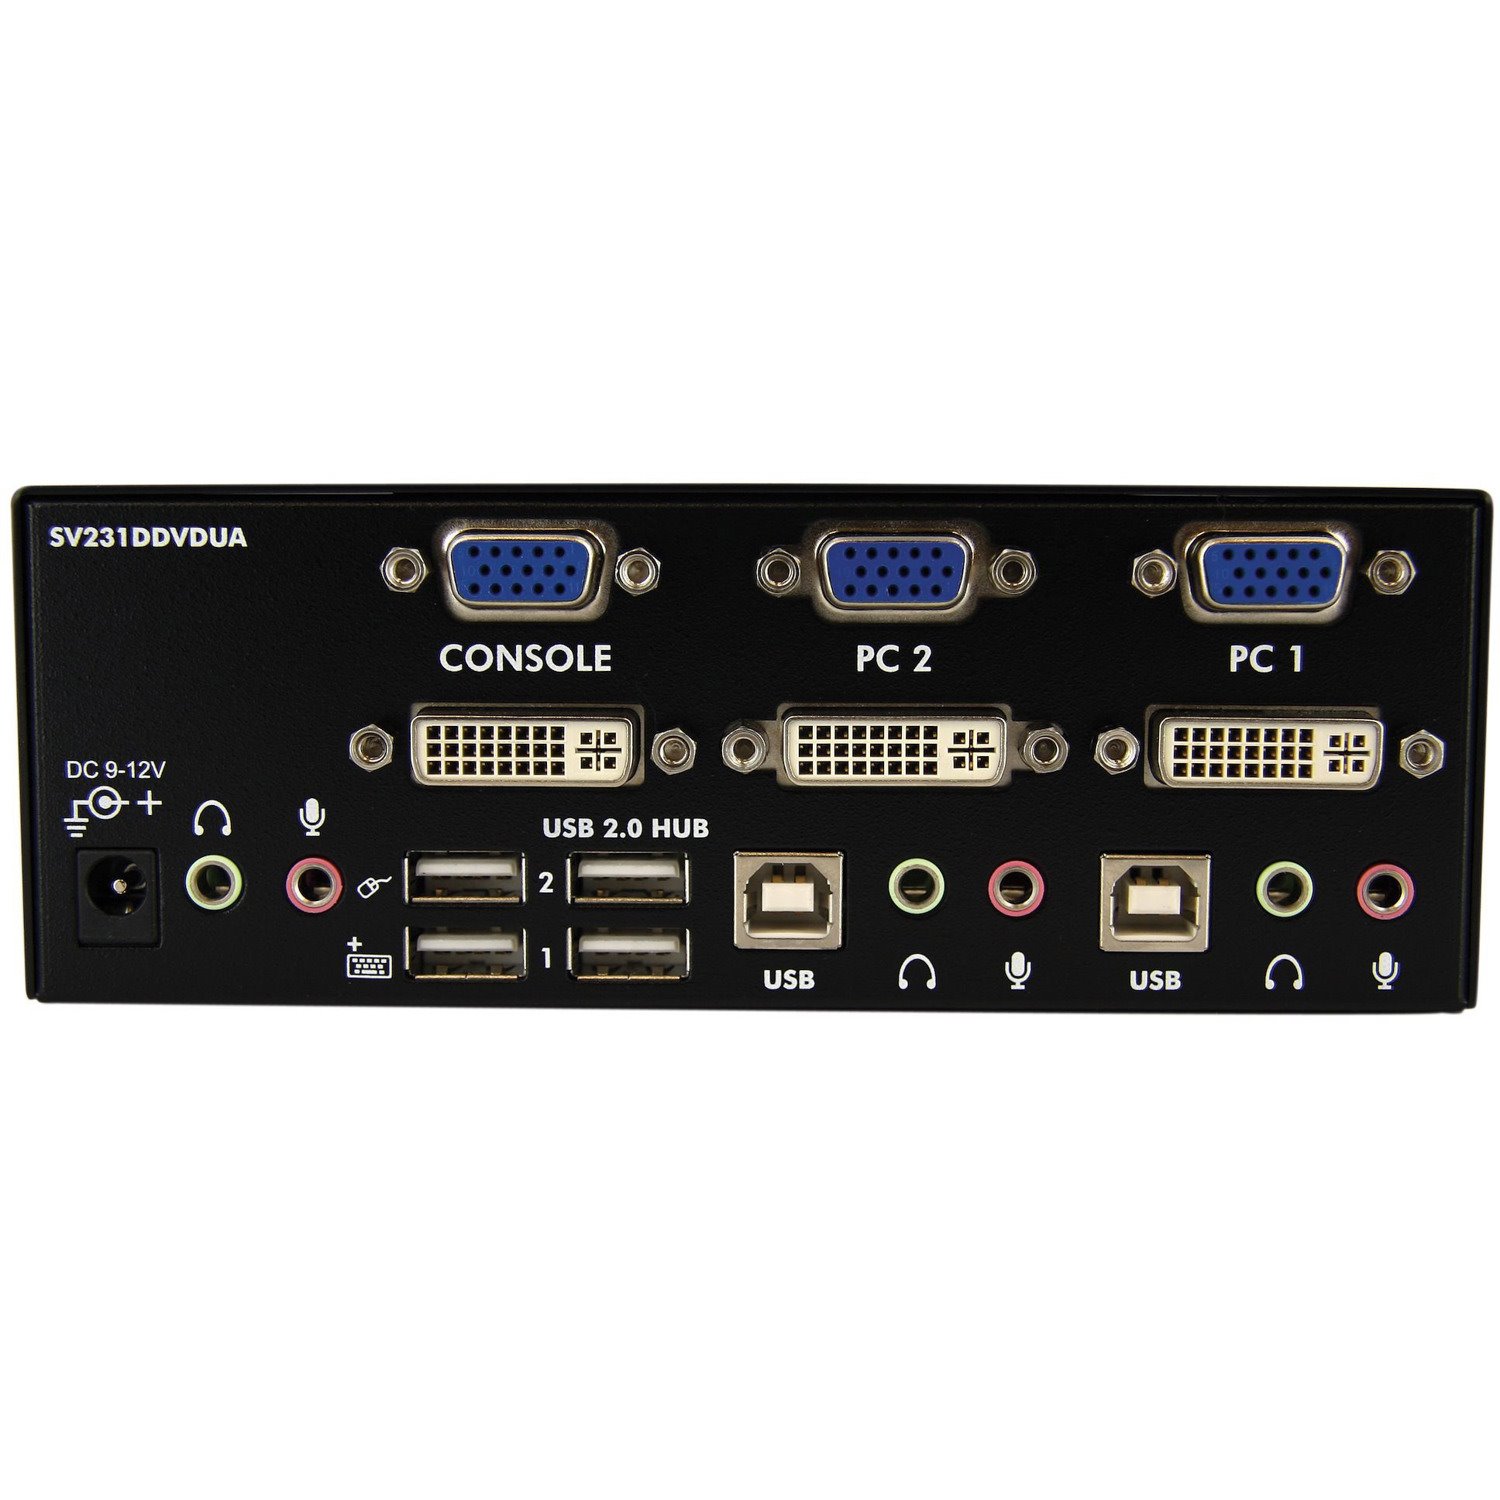 StarTech.com 2 Port KVM Switch - DVI and VGA w/ Audio and USB 2.0 Hub &acirc;&euro;" Dual Monitor / Display / Screen KVM Switch - DVI VGA (SV231DDVDUA)